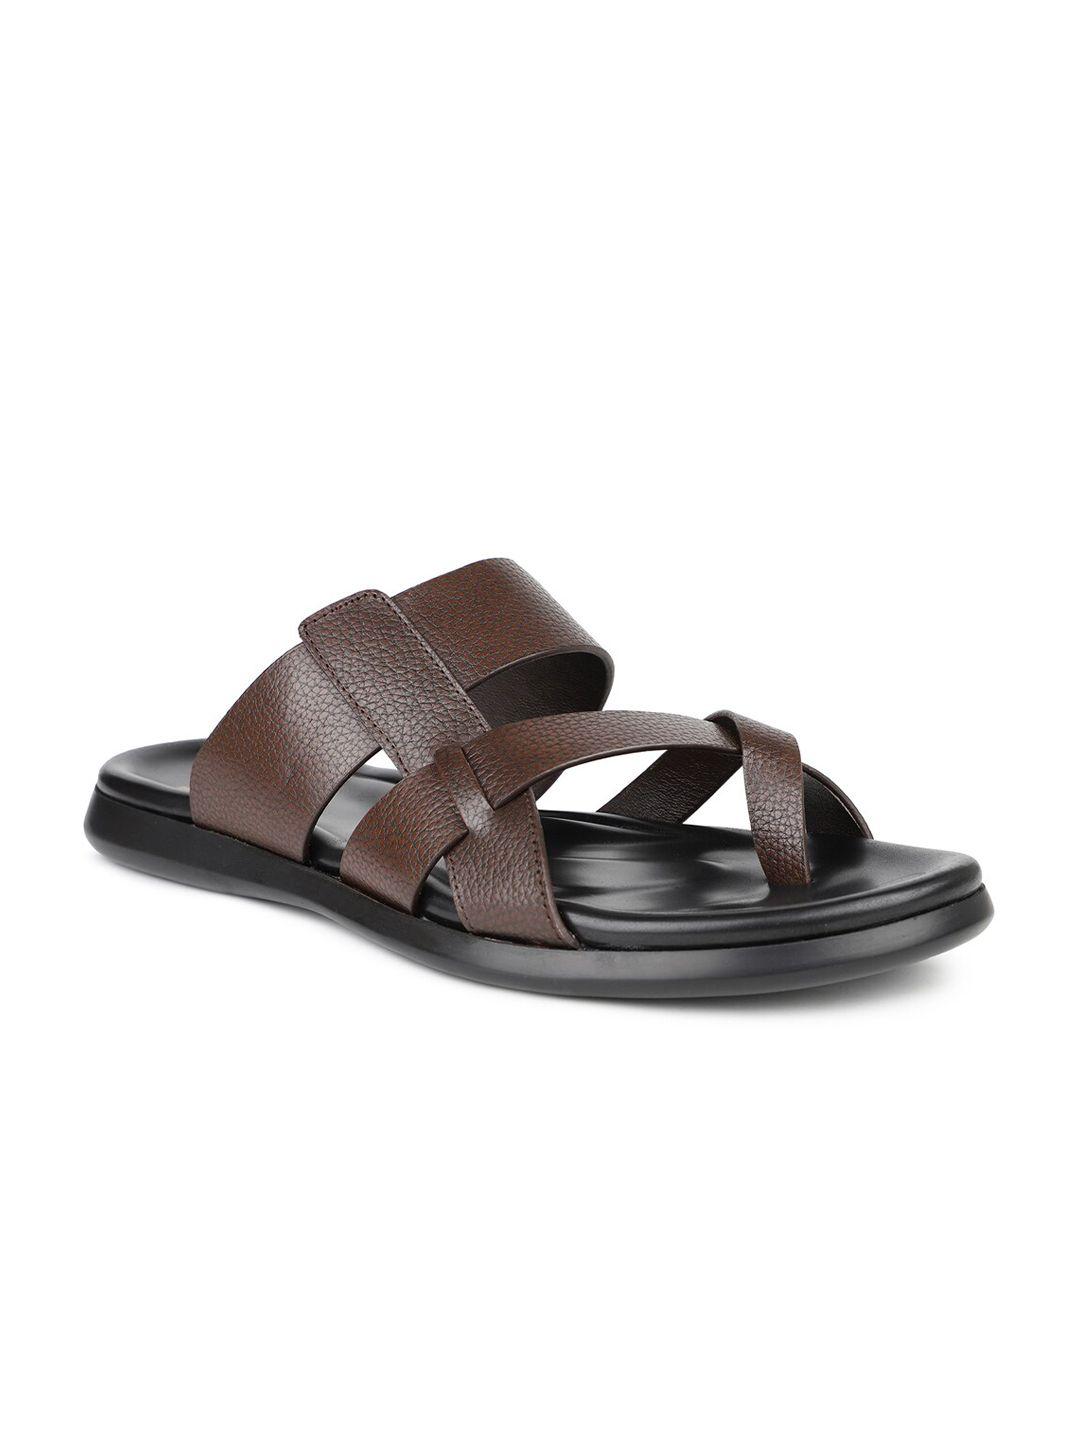 atesber men brown leather comfort sandals